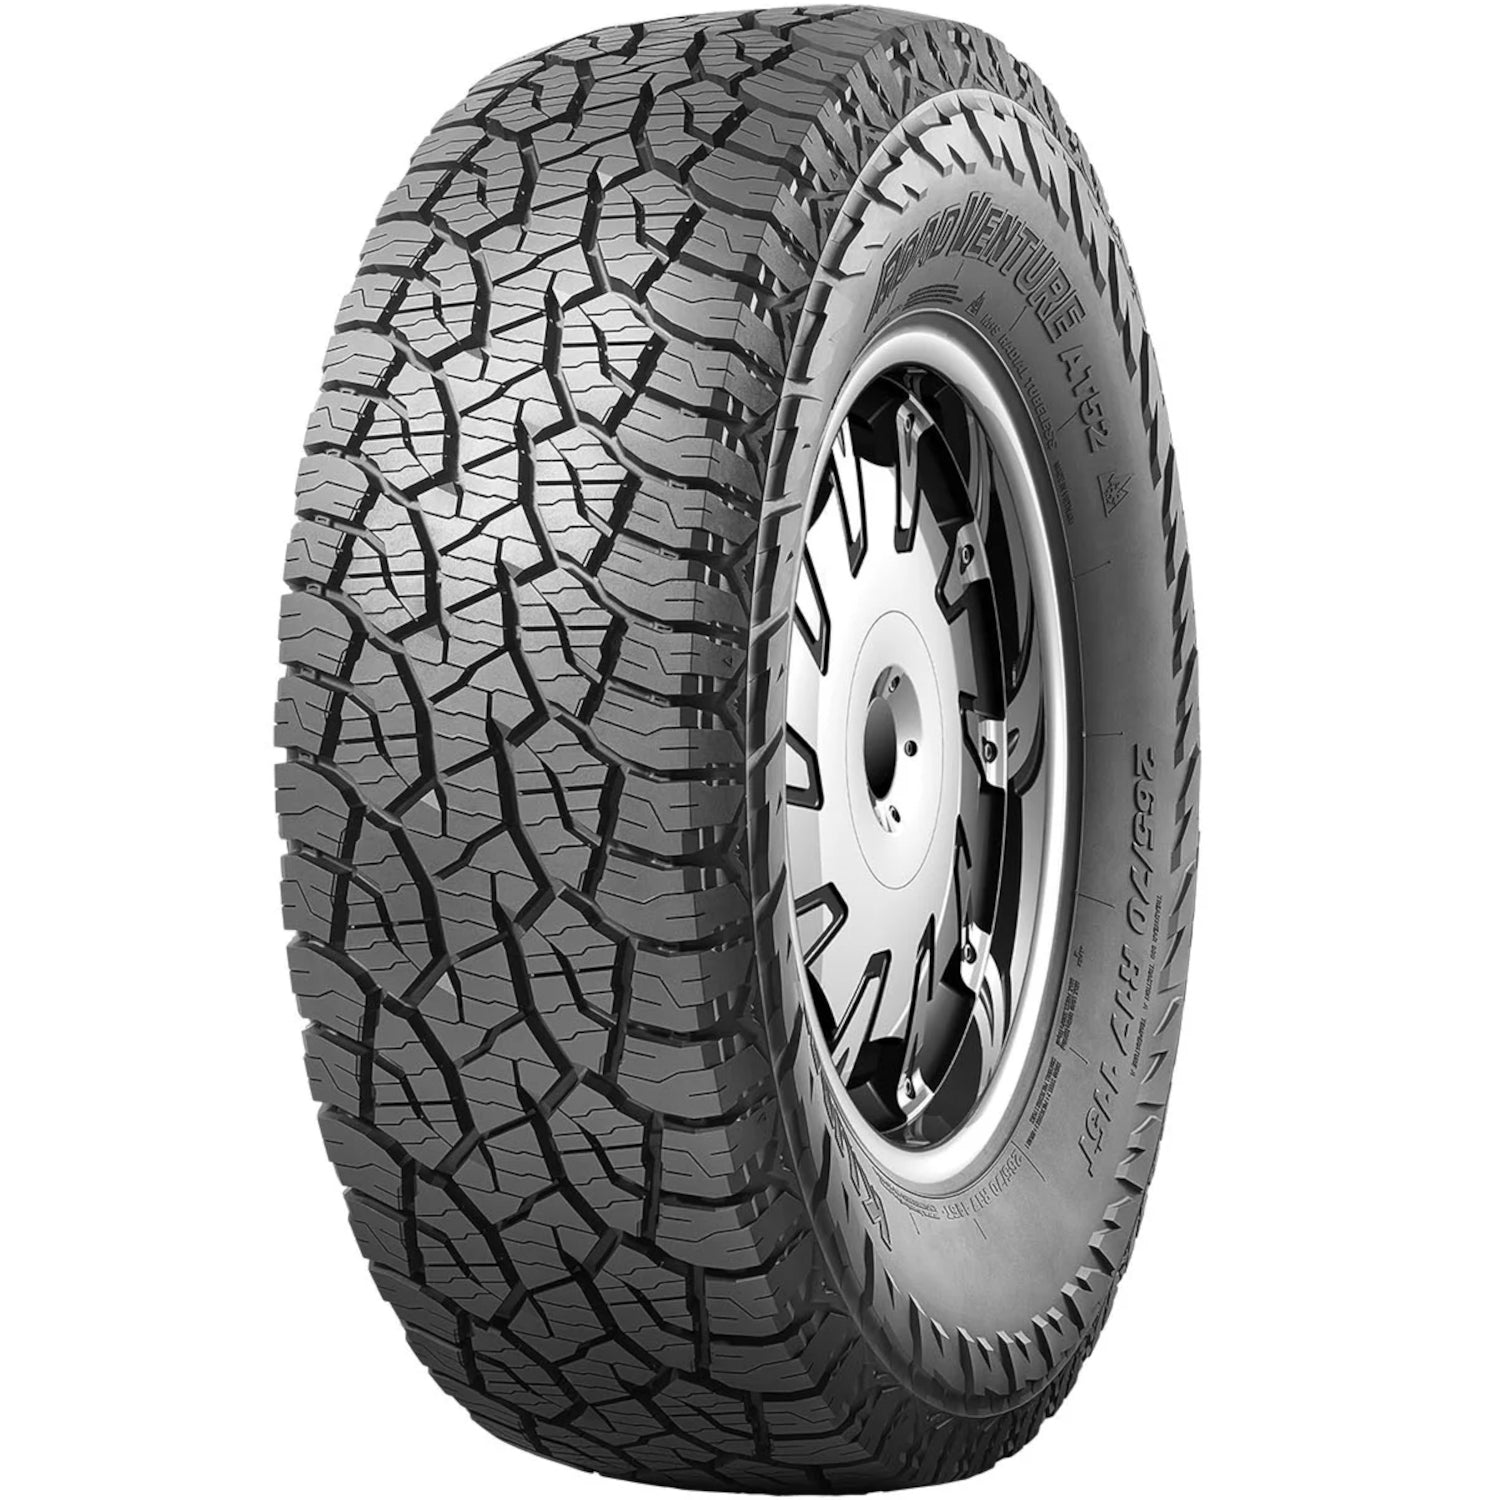 KUMHO ROAD VENTURE AT52 275/65R18 (32.1X10.8R 18) Tires